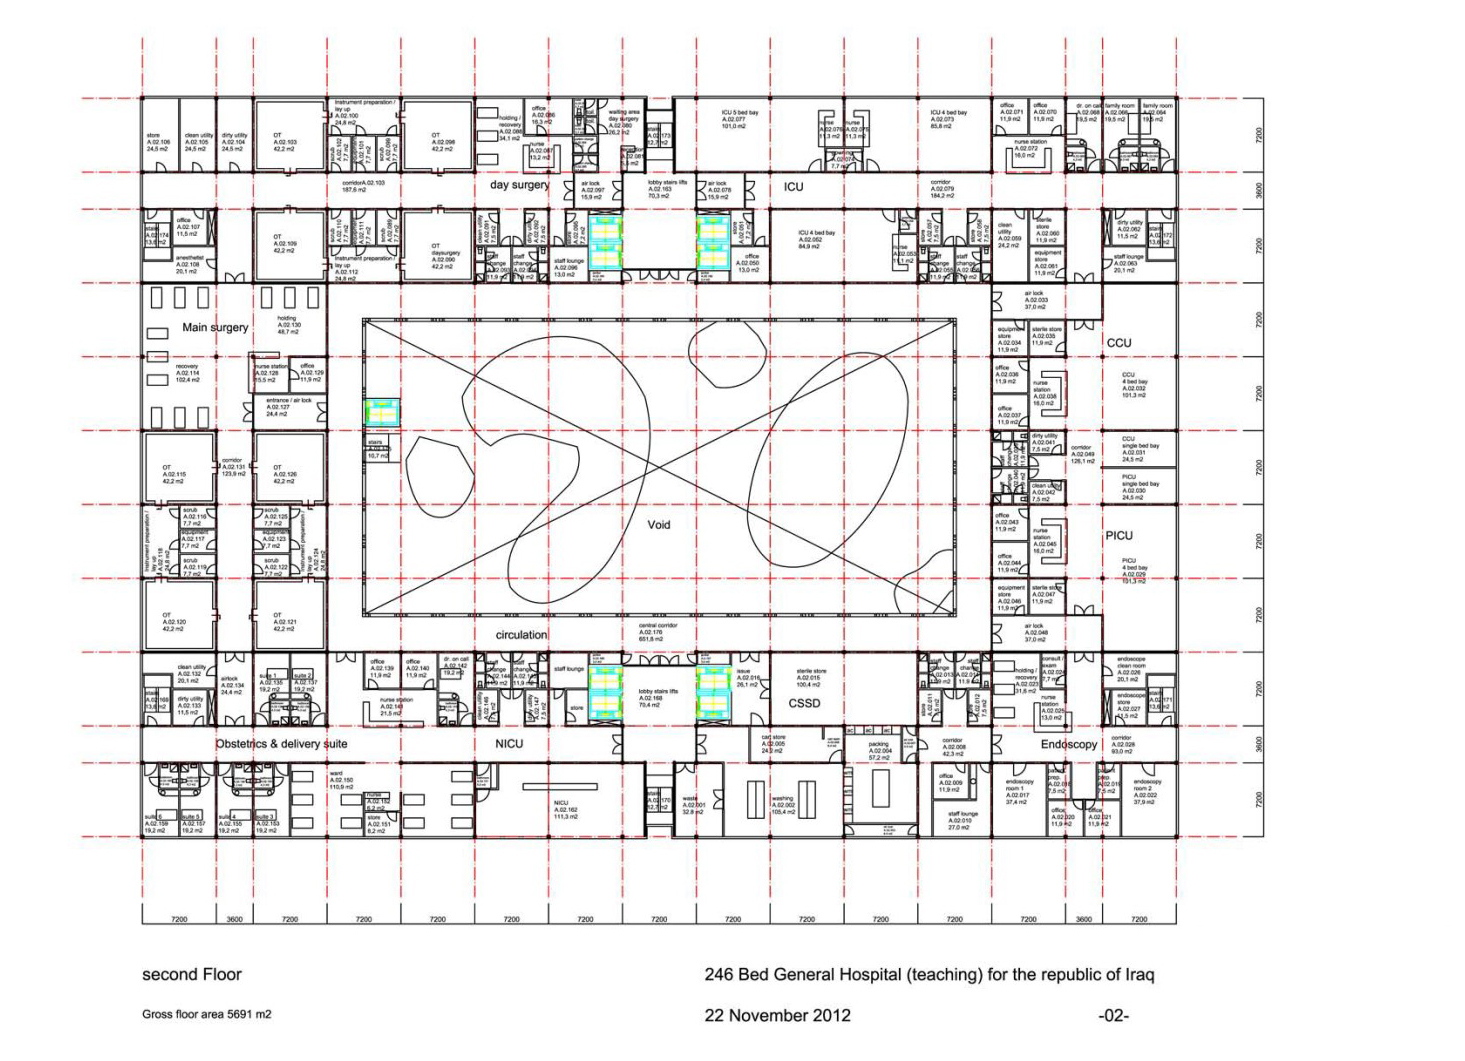 20 A quadrant hospital for 400 beds, put together with the modular design principle